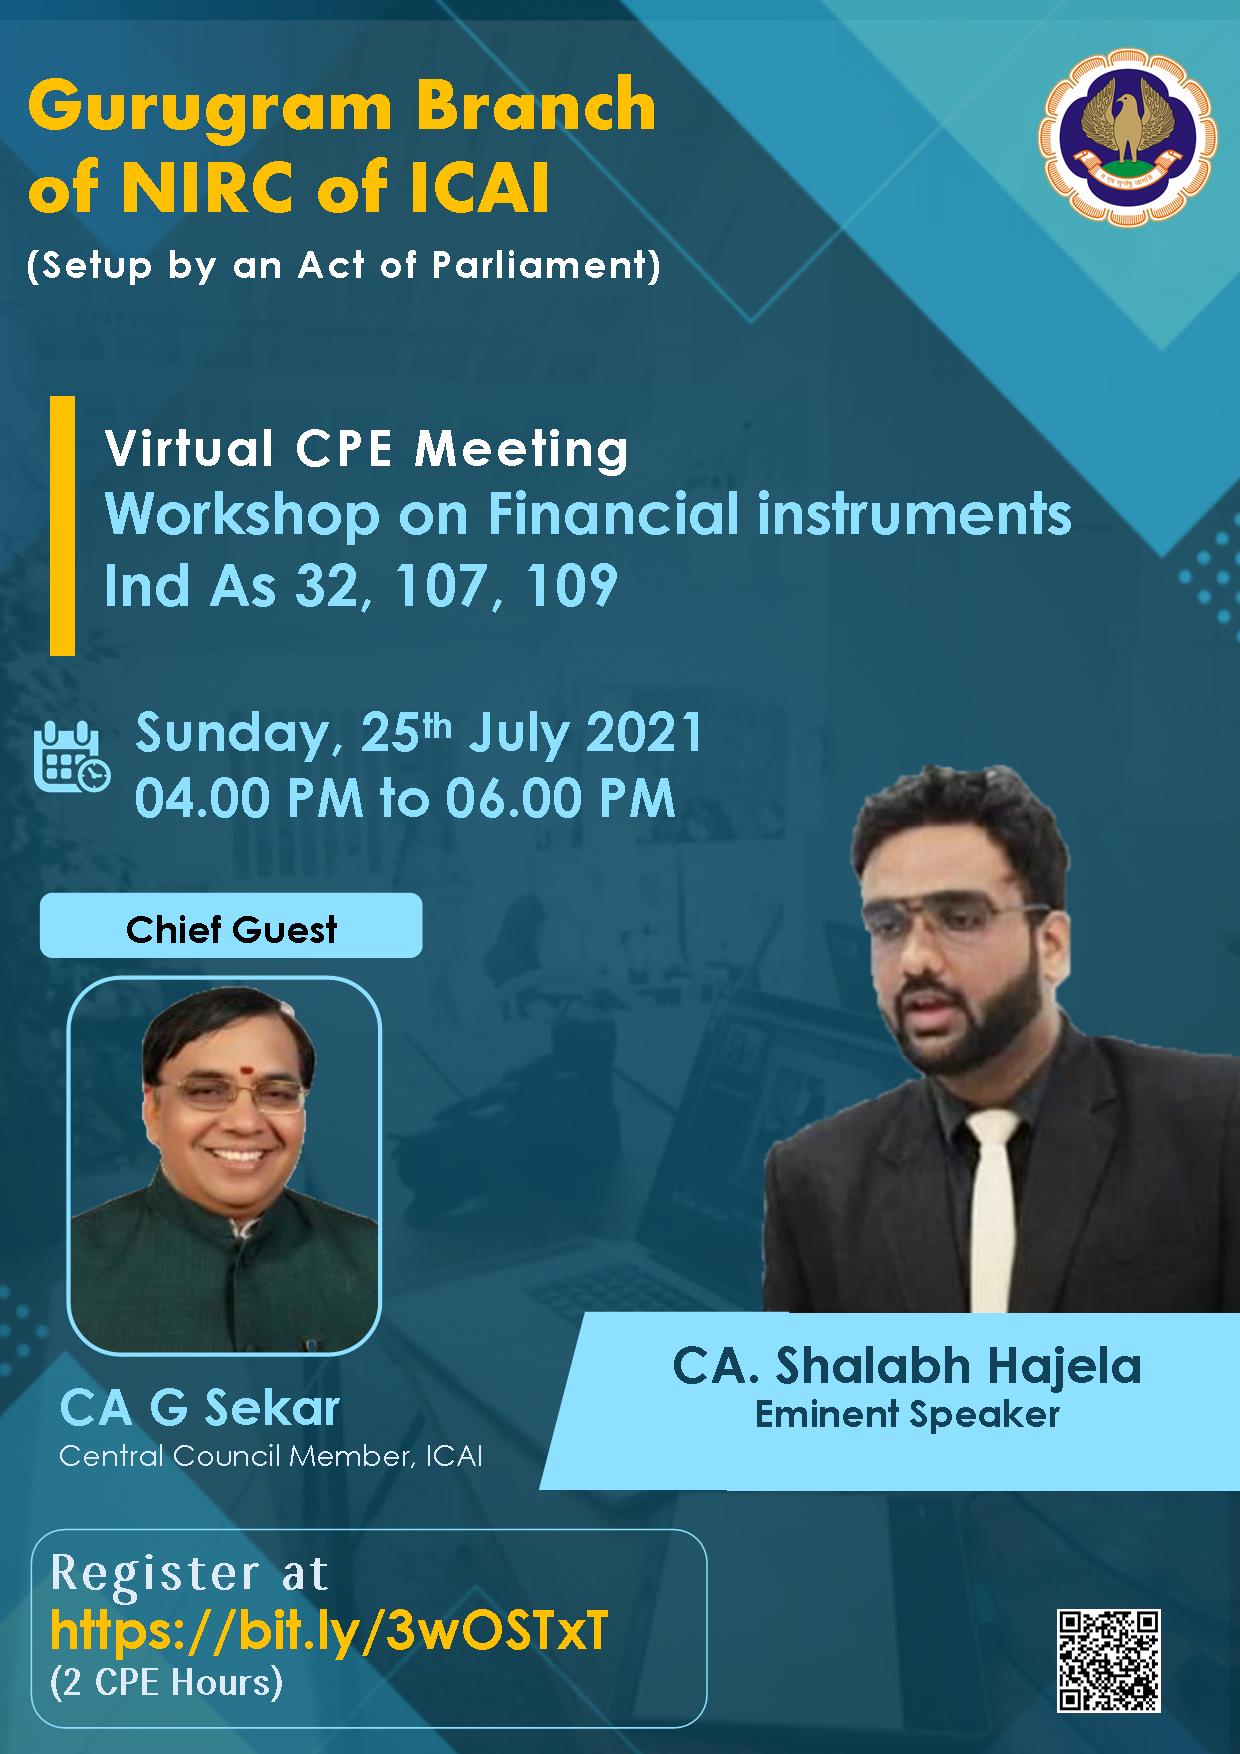 VCM on Workshop on Financial instruments. Ind As 32, 107, 109